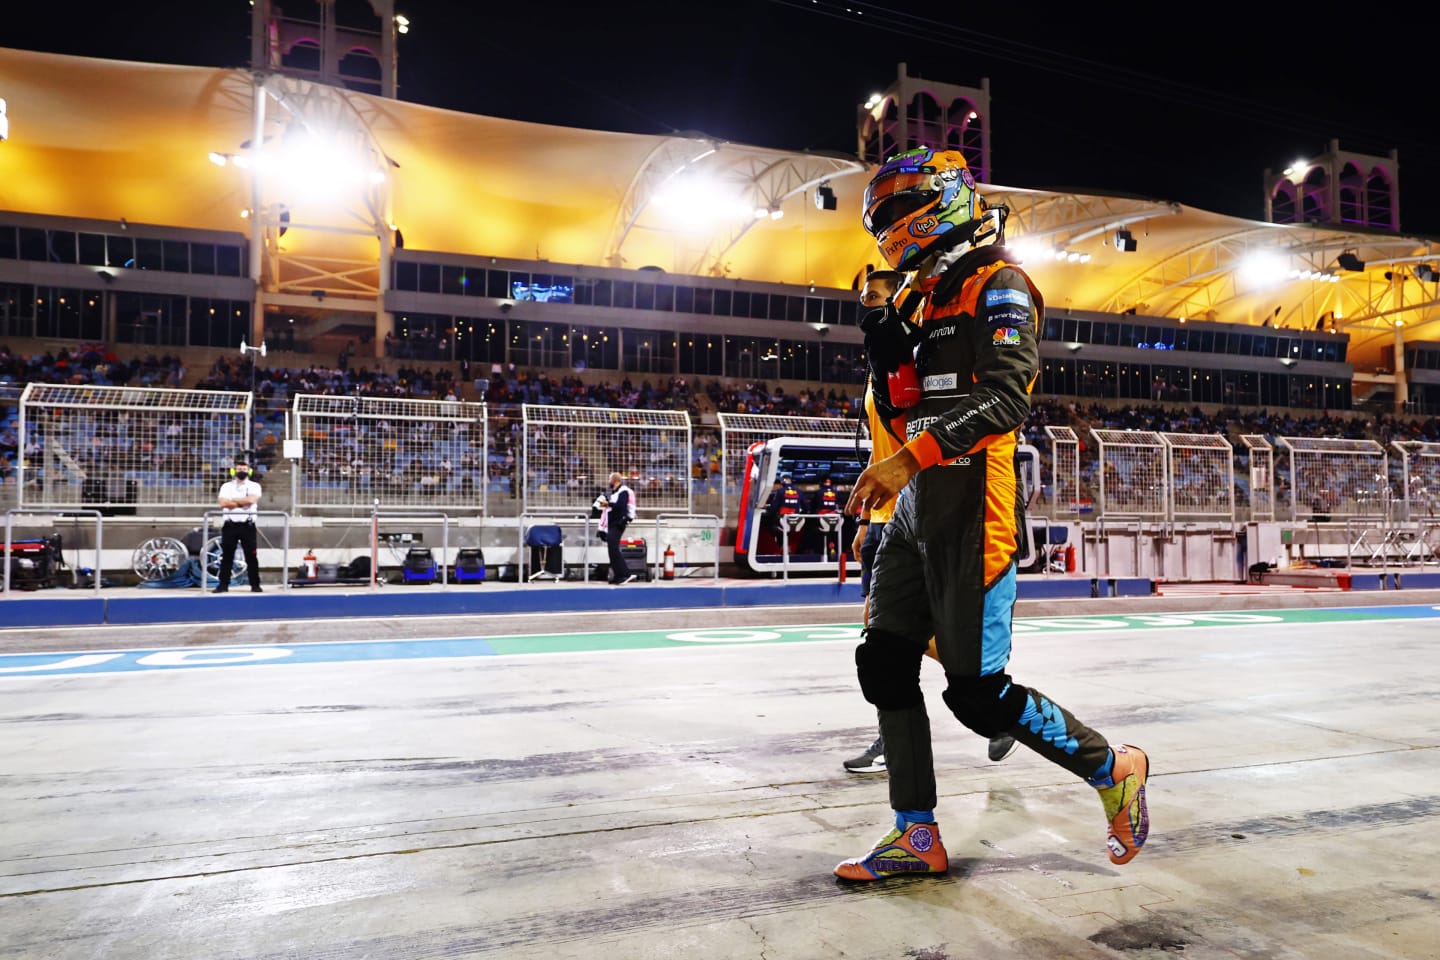 BAHRAIN, BAHRAIN - MARCH 19: Daniel Ricciardo of Australia and McLaren walks in the pitlane after